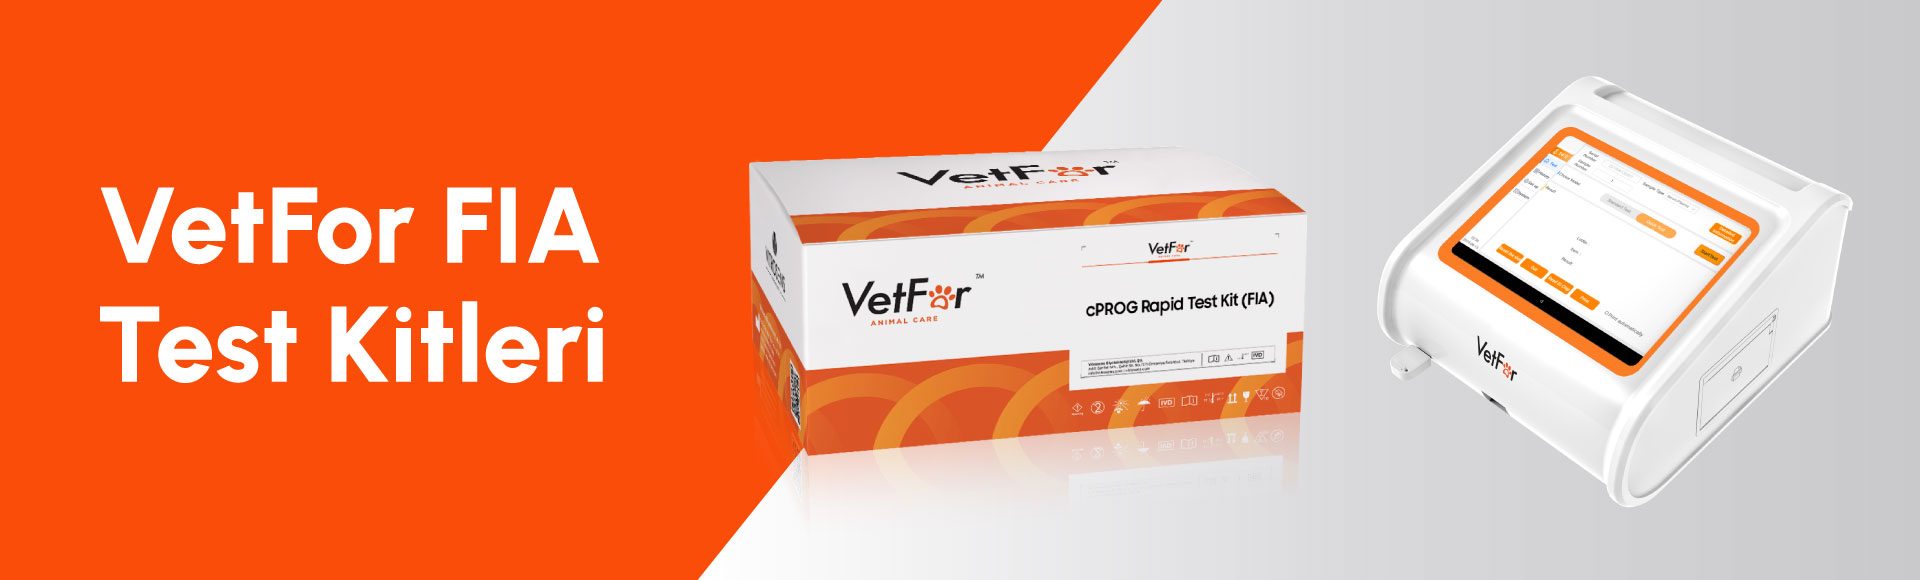 VetFor FIA Test Kitleri Banner